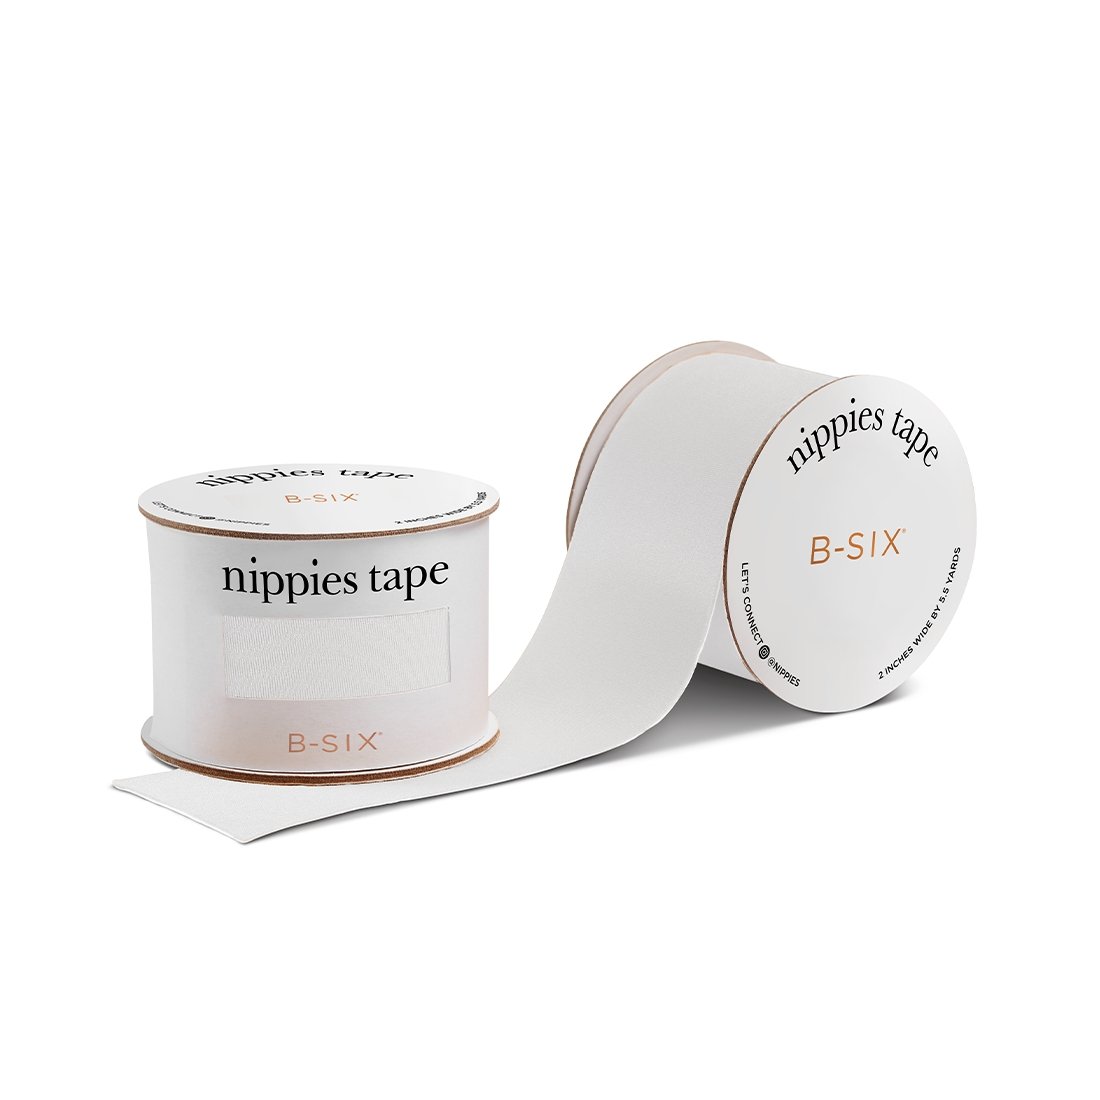 B-Six Nippies Basics Adhesive Nipple Covers – Top Drawer Lingerie